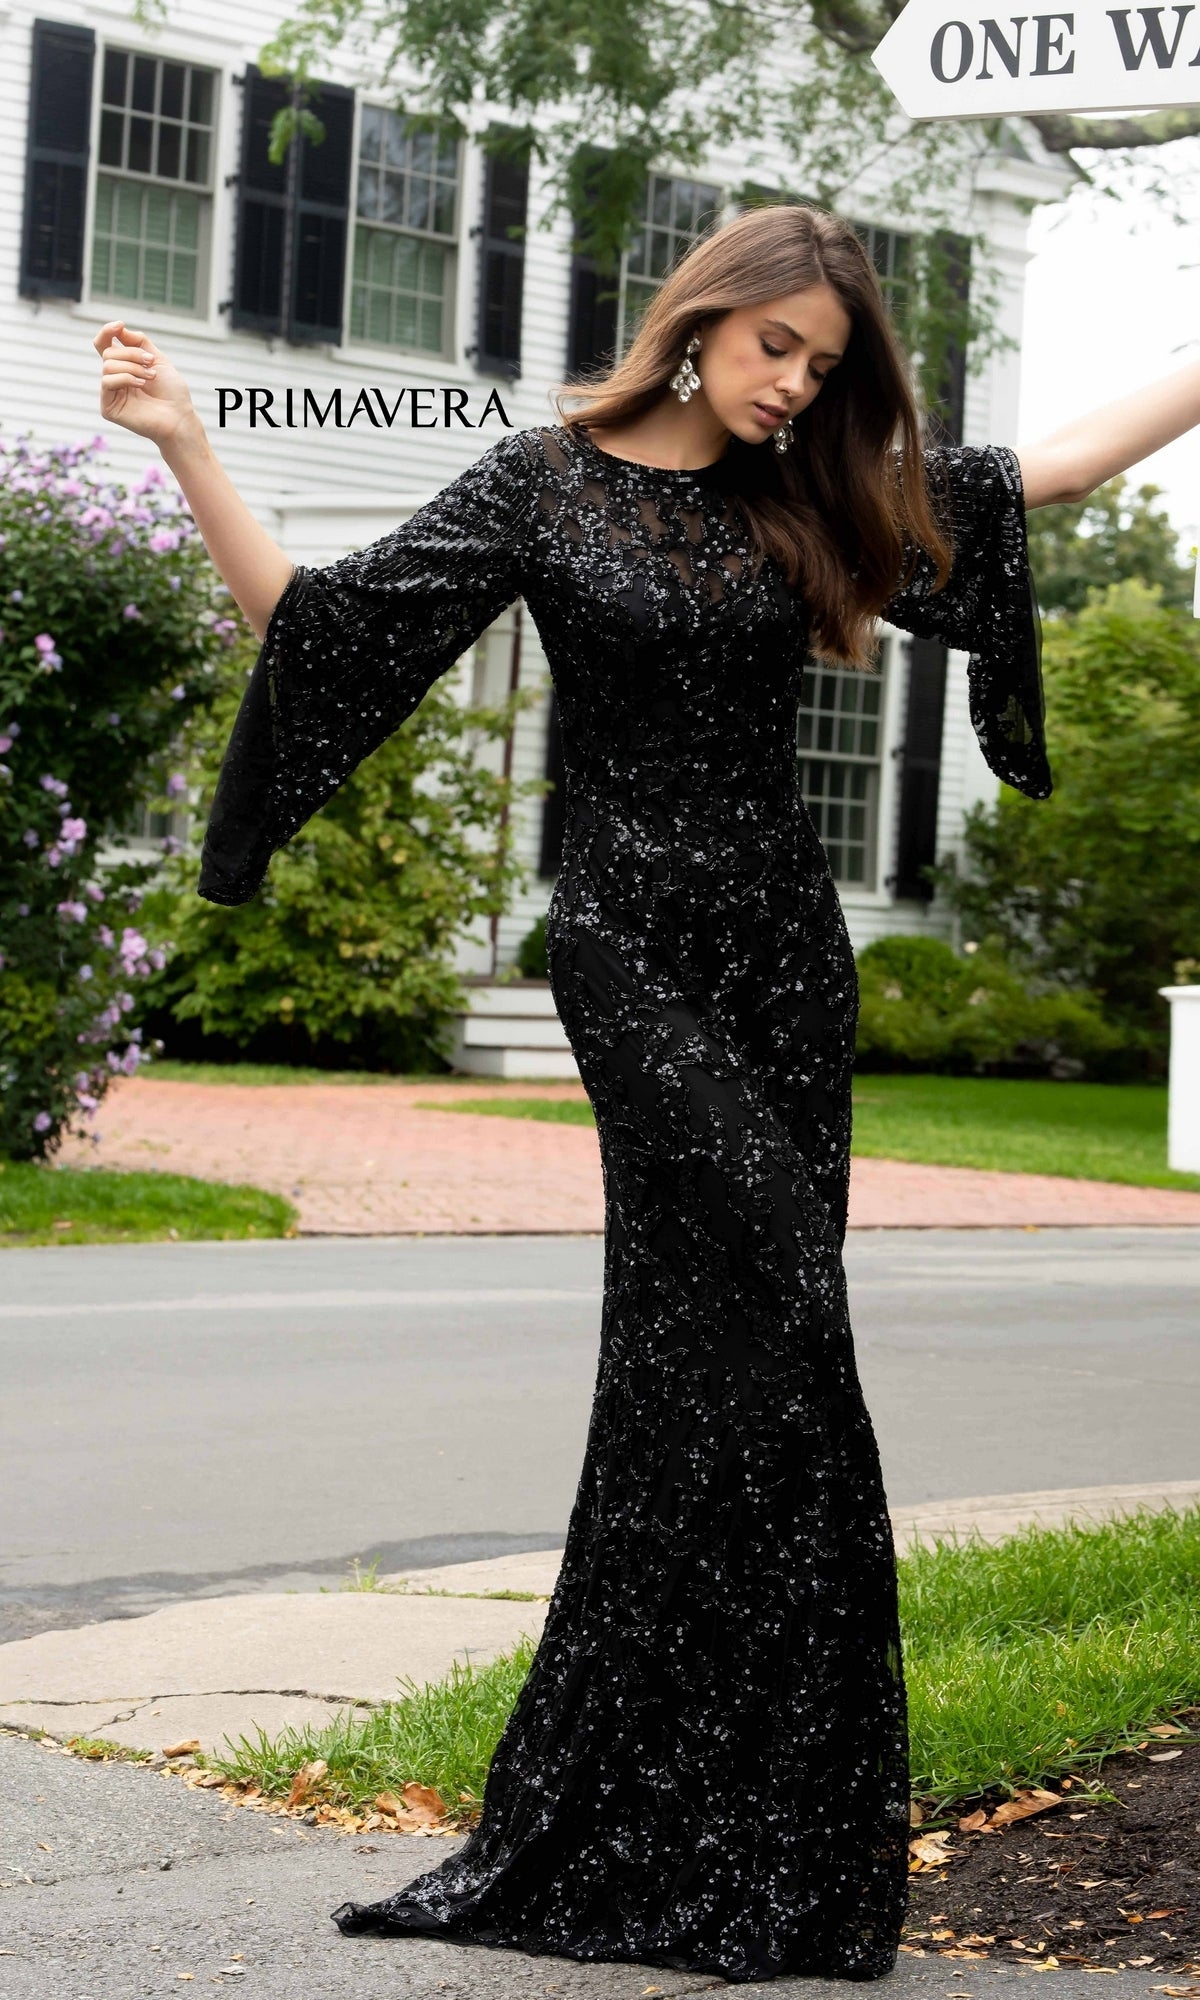 ASOS EDITION sheer knitted long sleeve maxi dress in black | ASOS